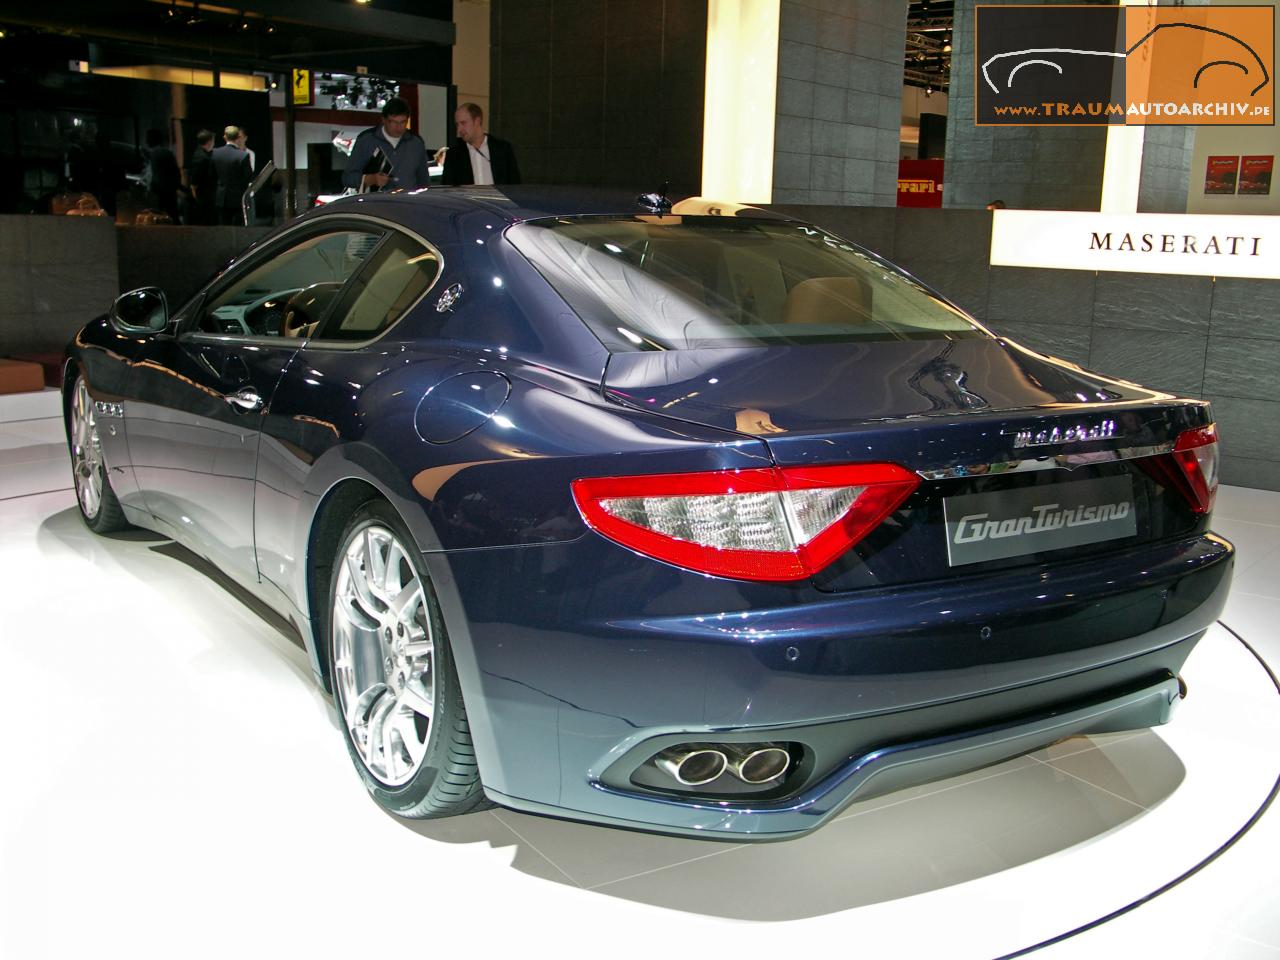 Maserati Granturismo '2007.jpg 142.9K